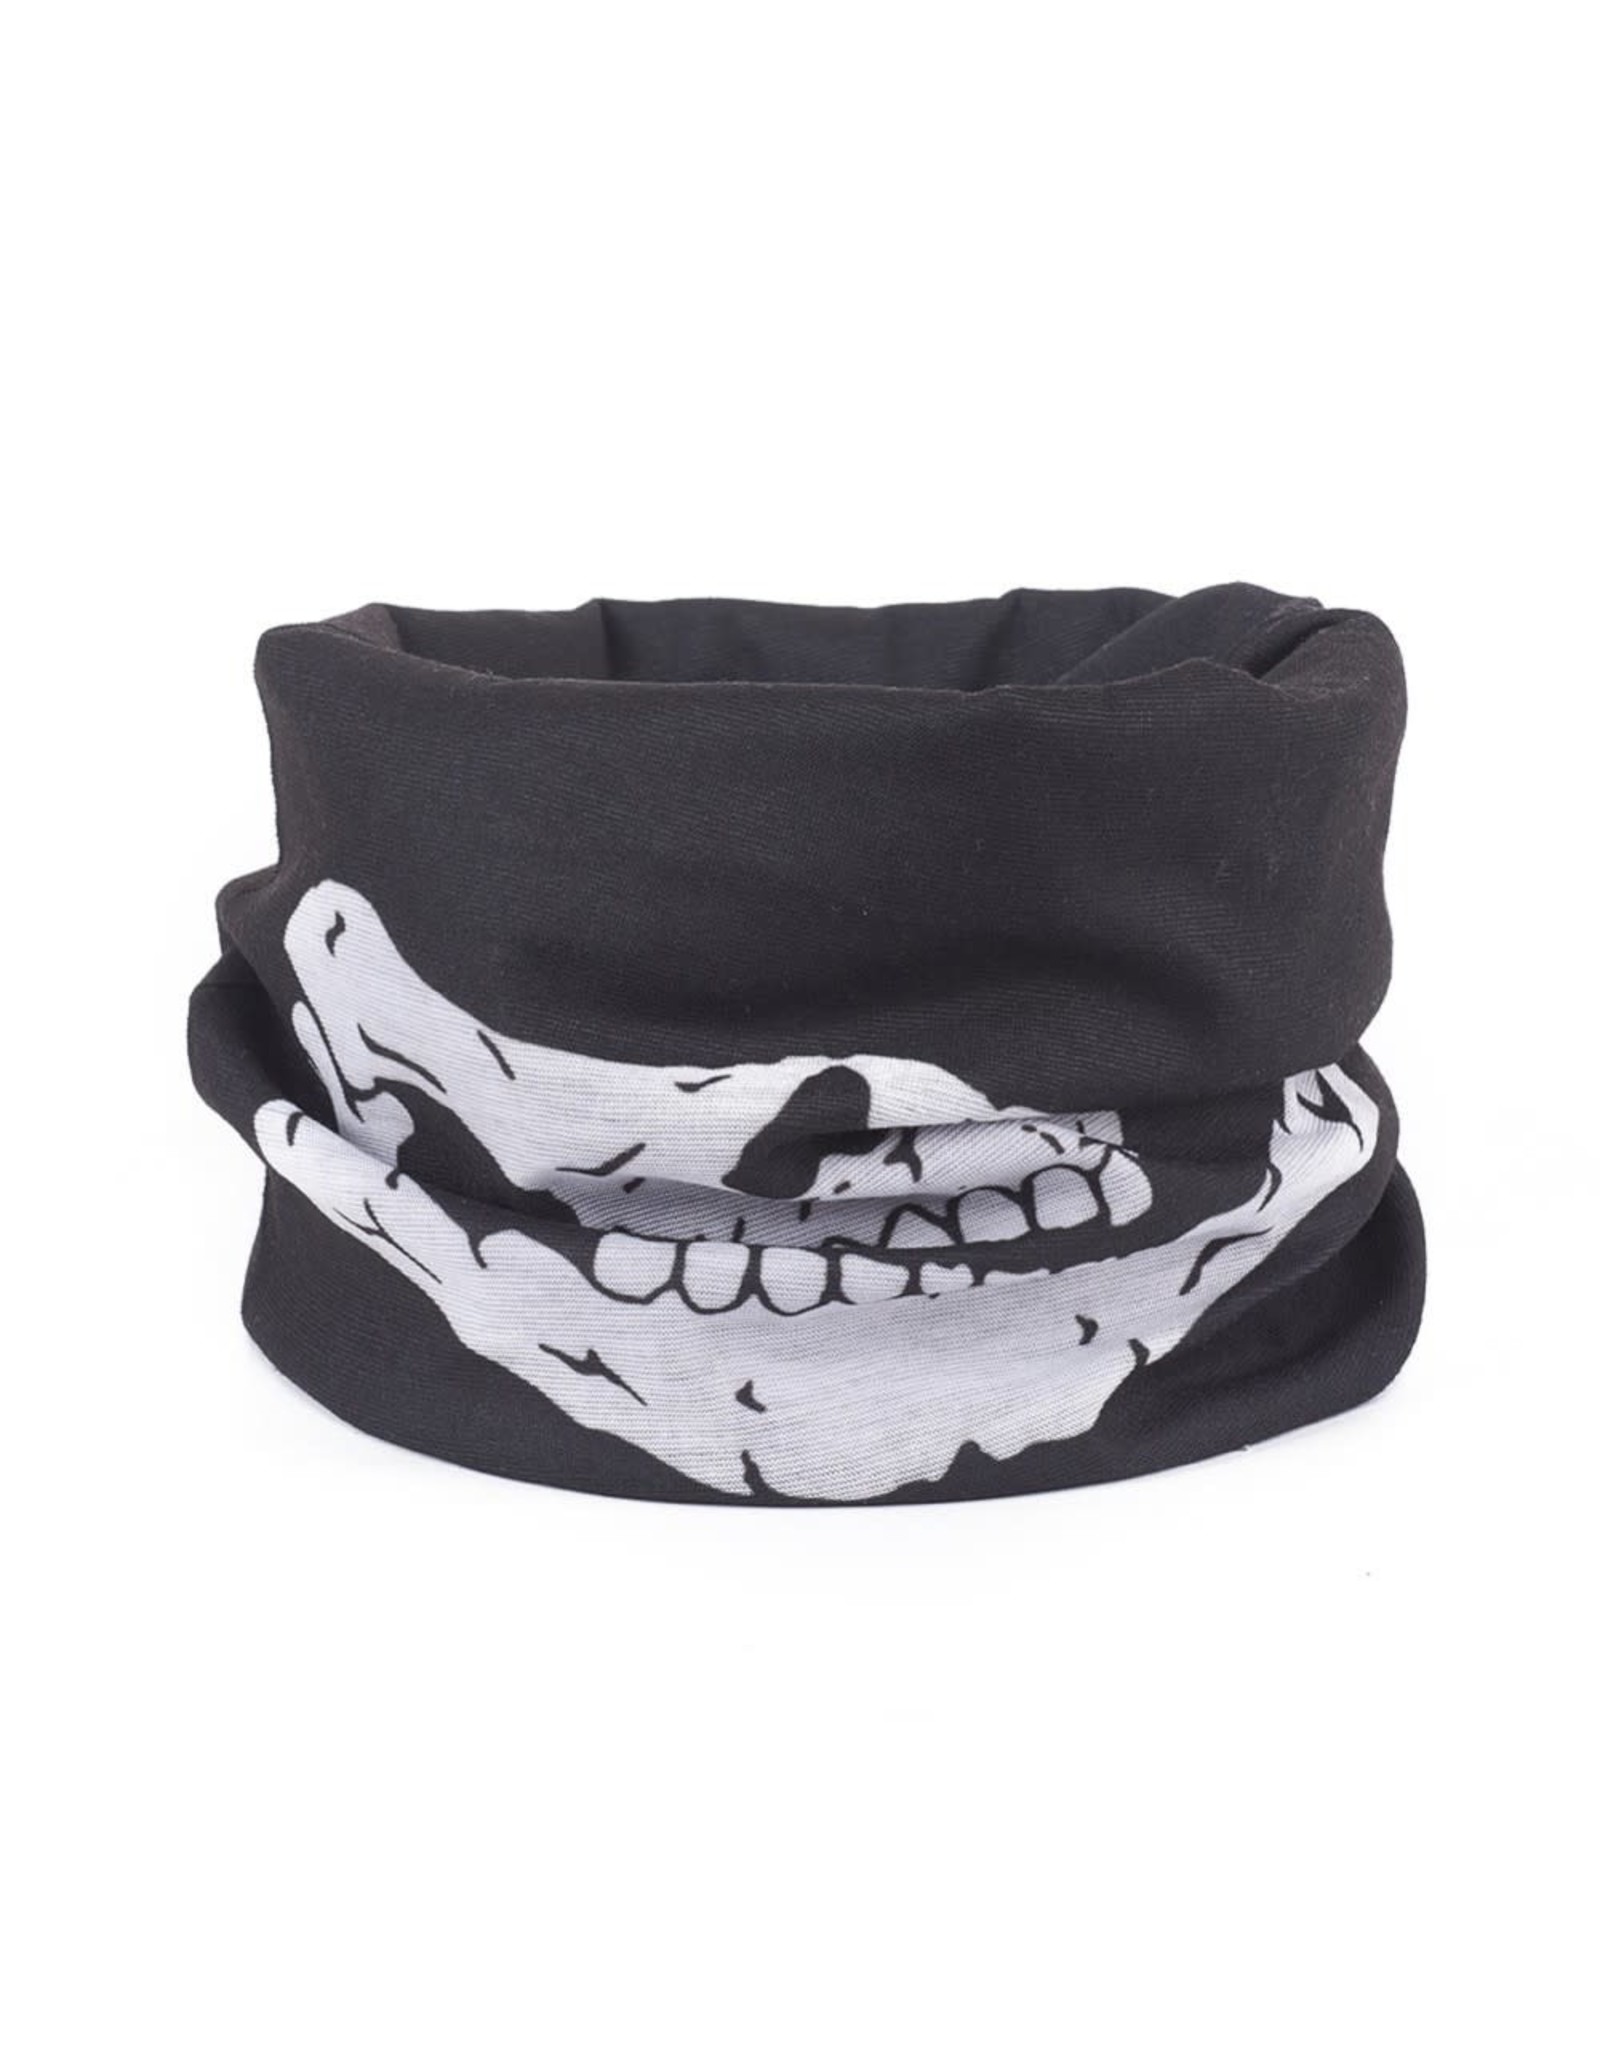 Headband Bandana 24x48cm Black/White Skull Face